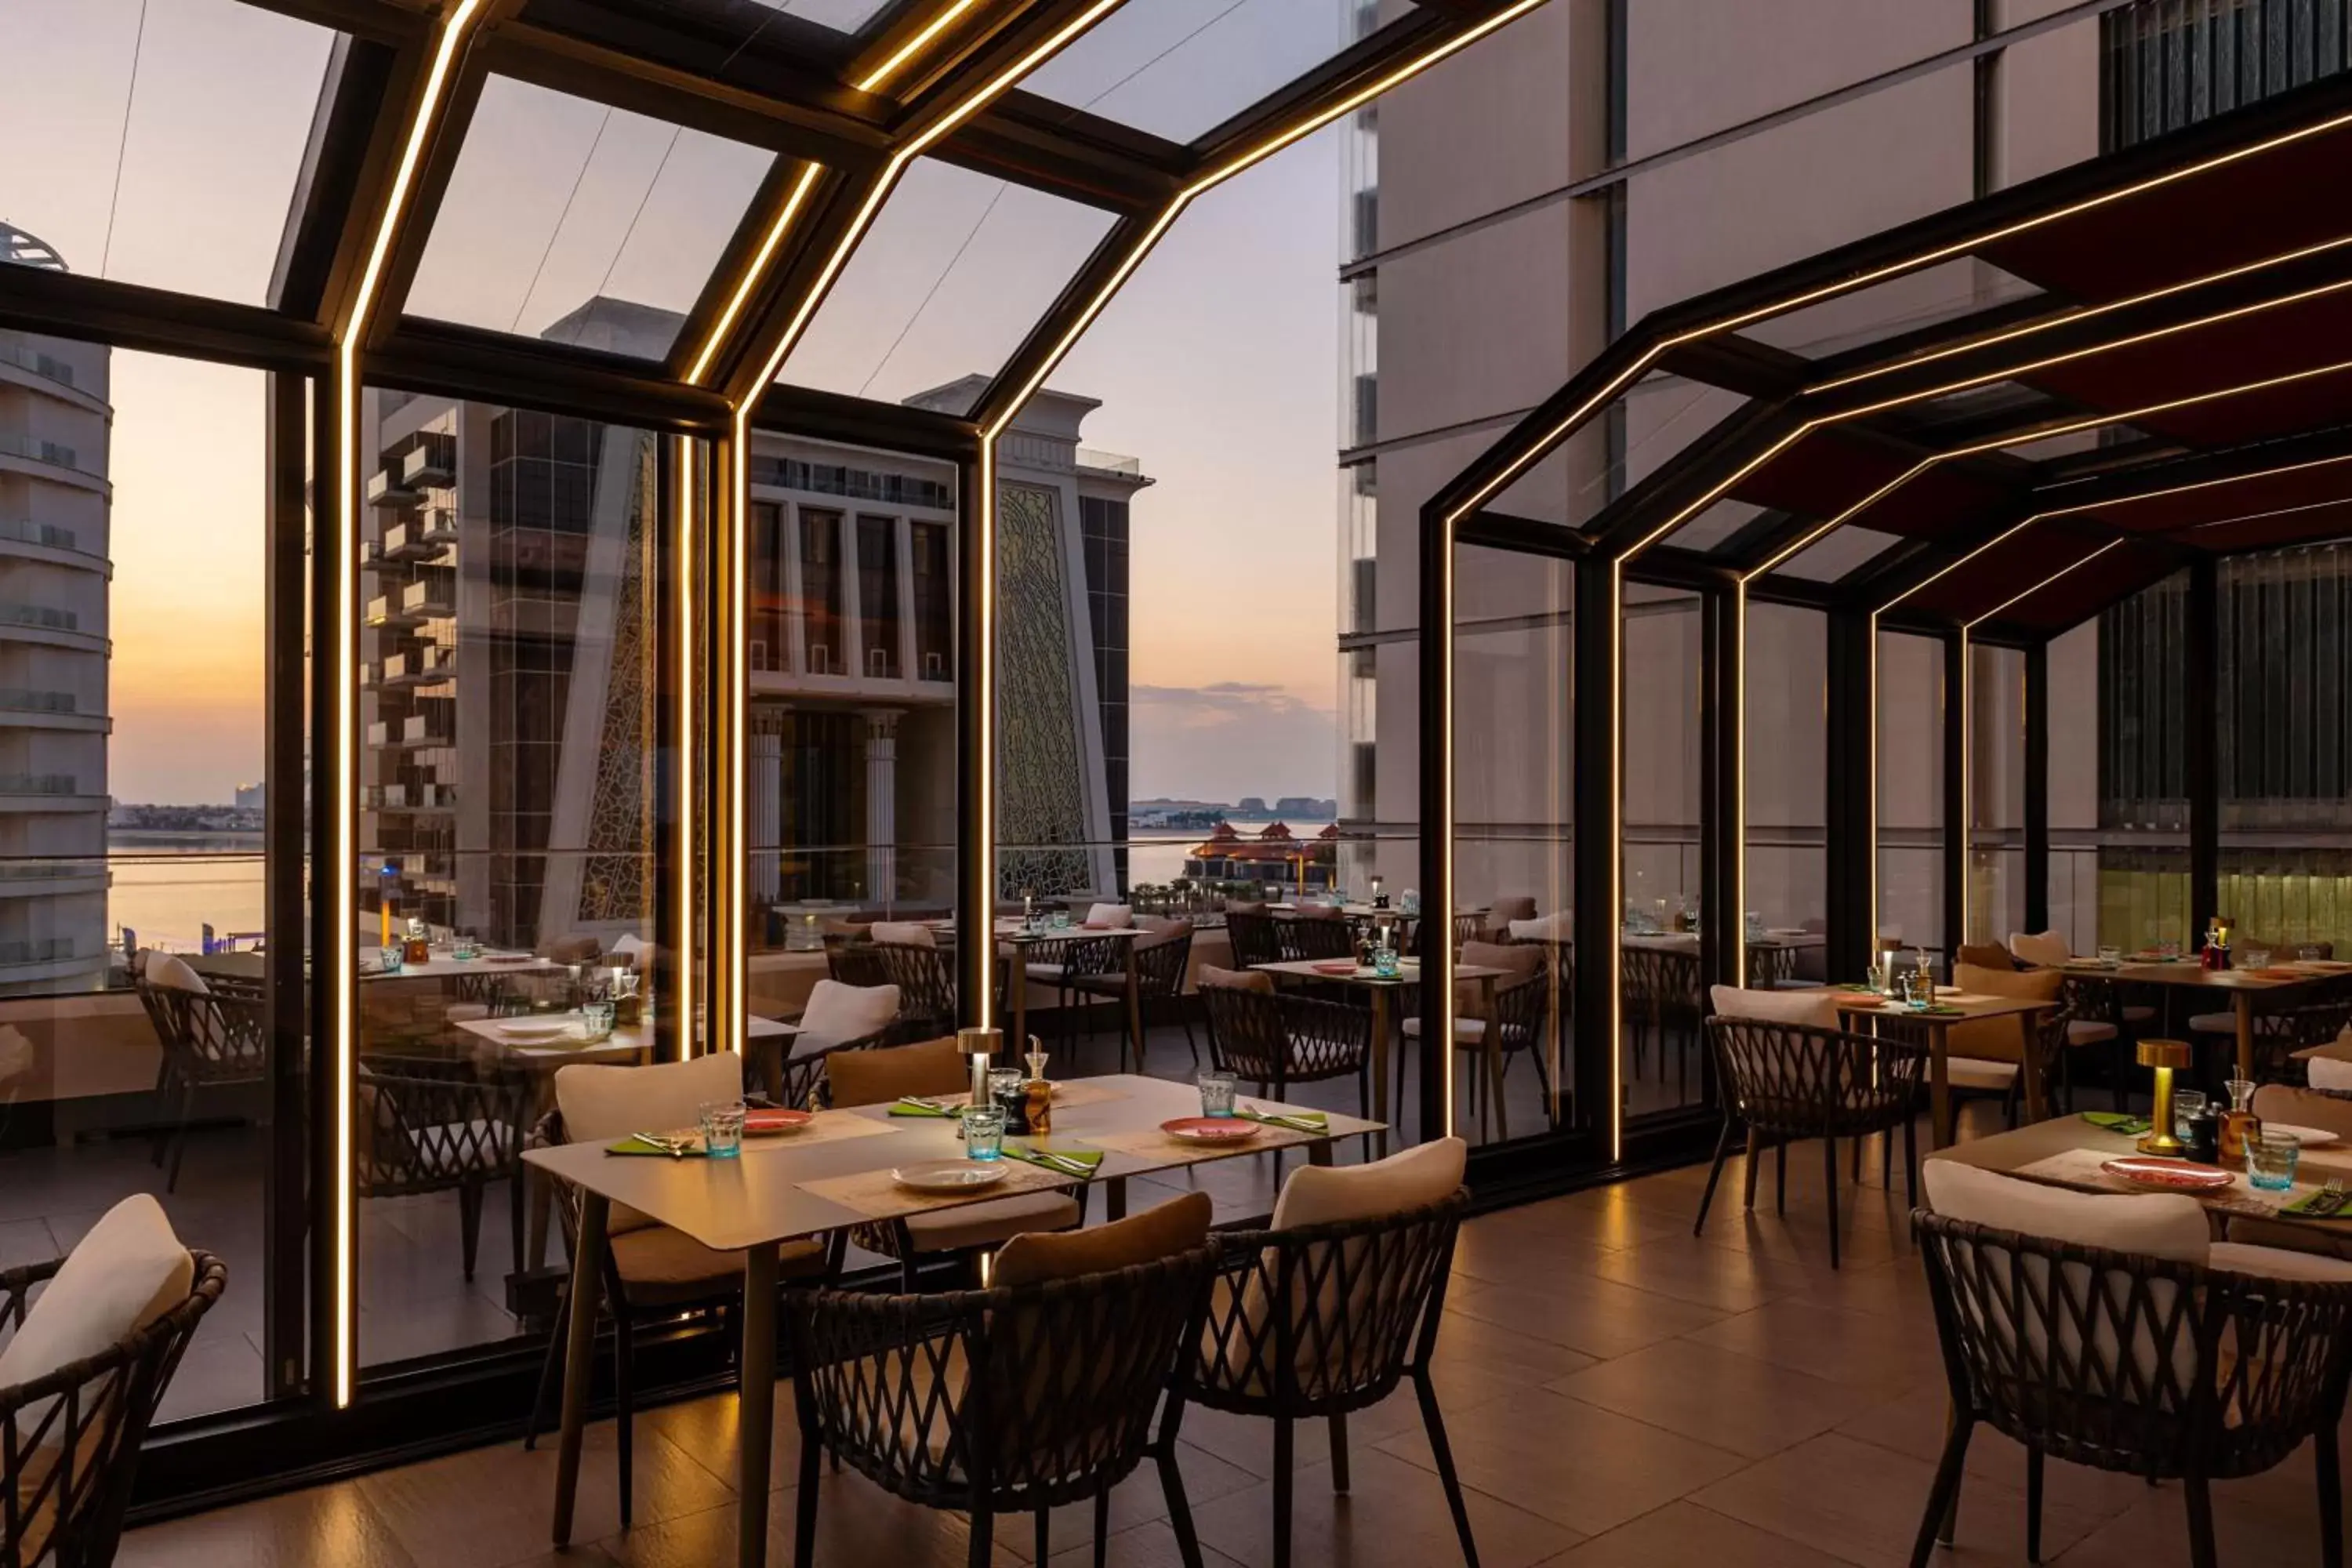 Restaurant/Places to Eat in Aloft Palm Jumeirah